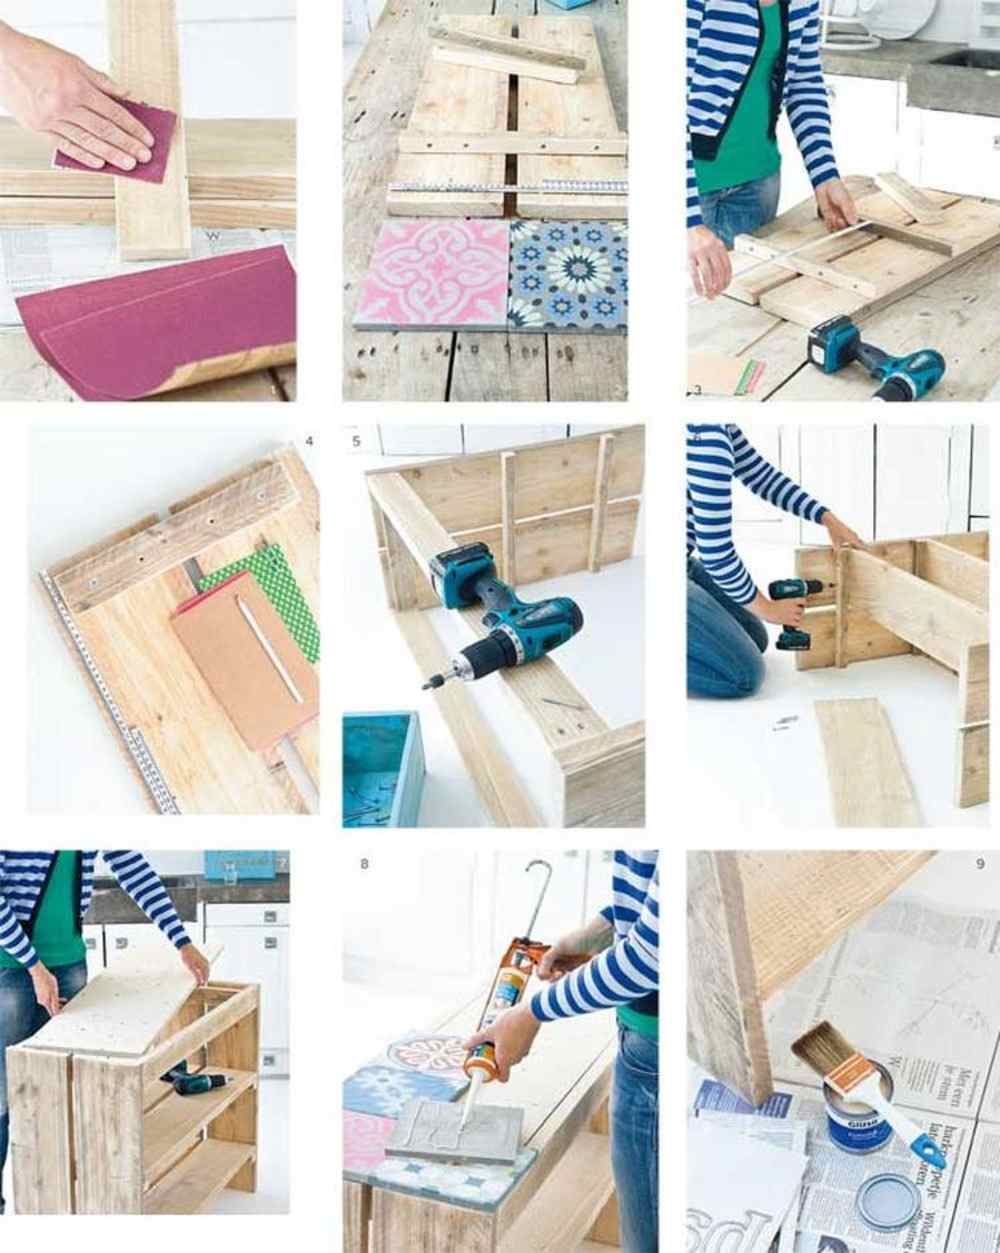 Bygg ditt eget kakelbord med sandpapper, träpaneler, injekteringsbruk och silikon